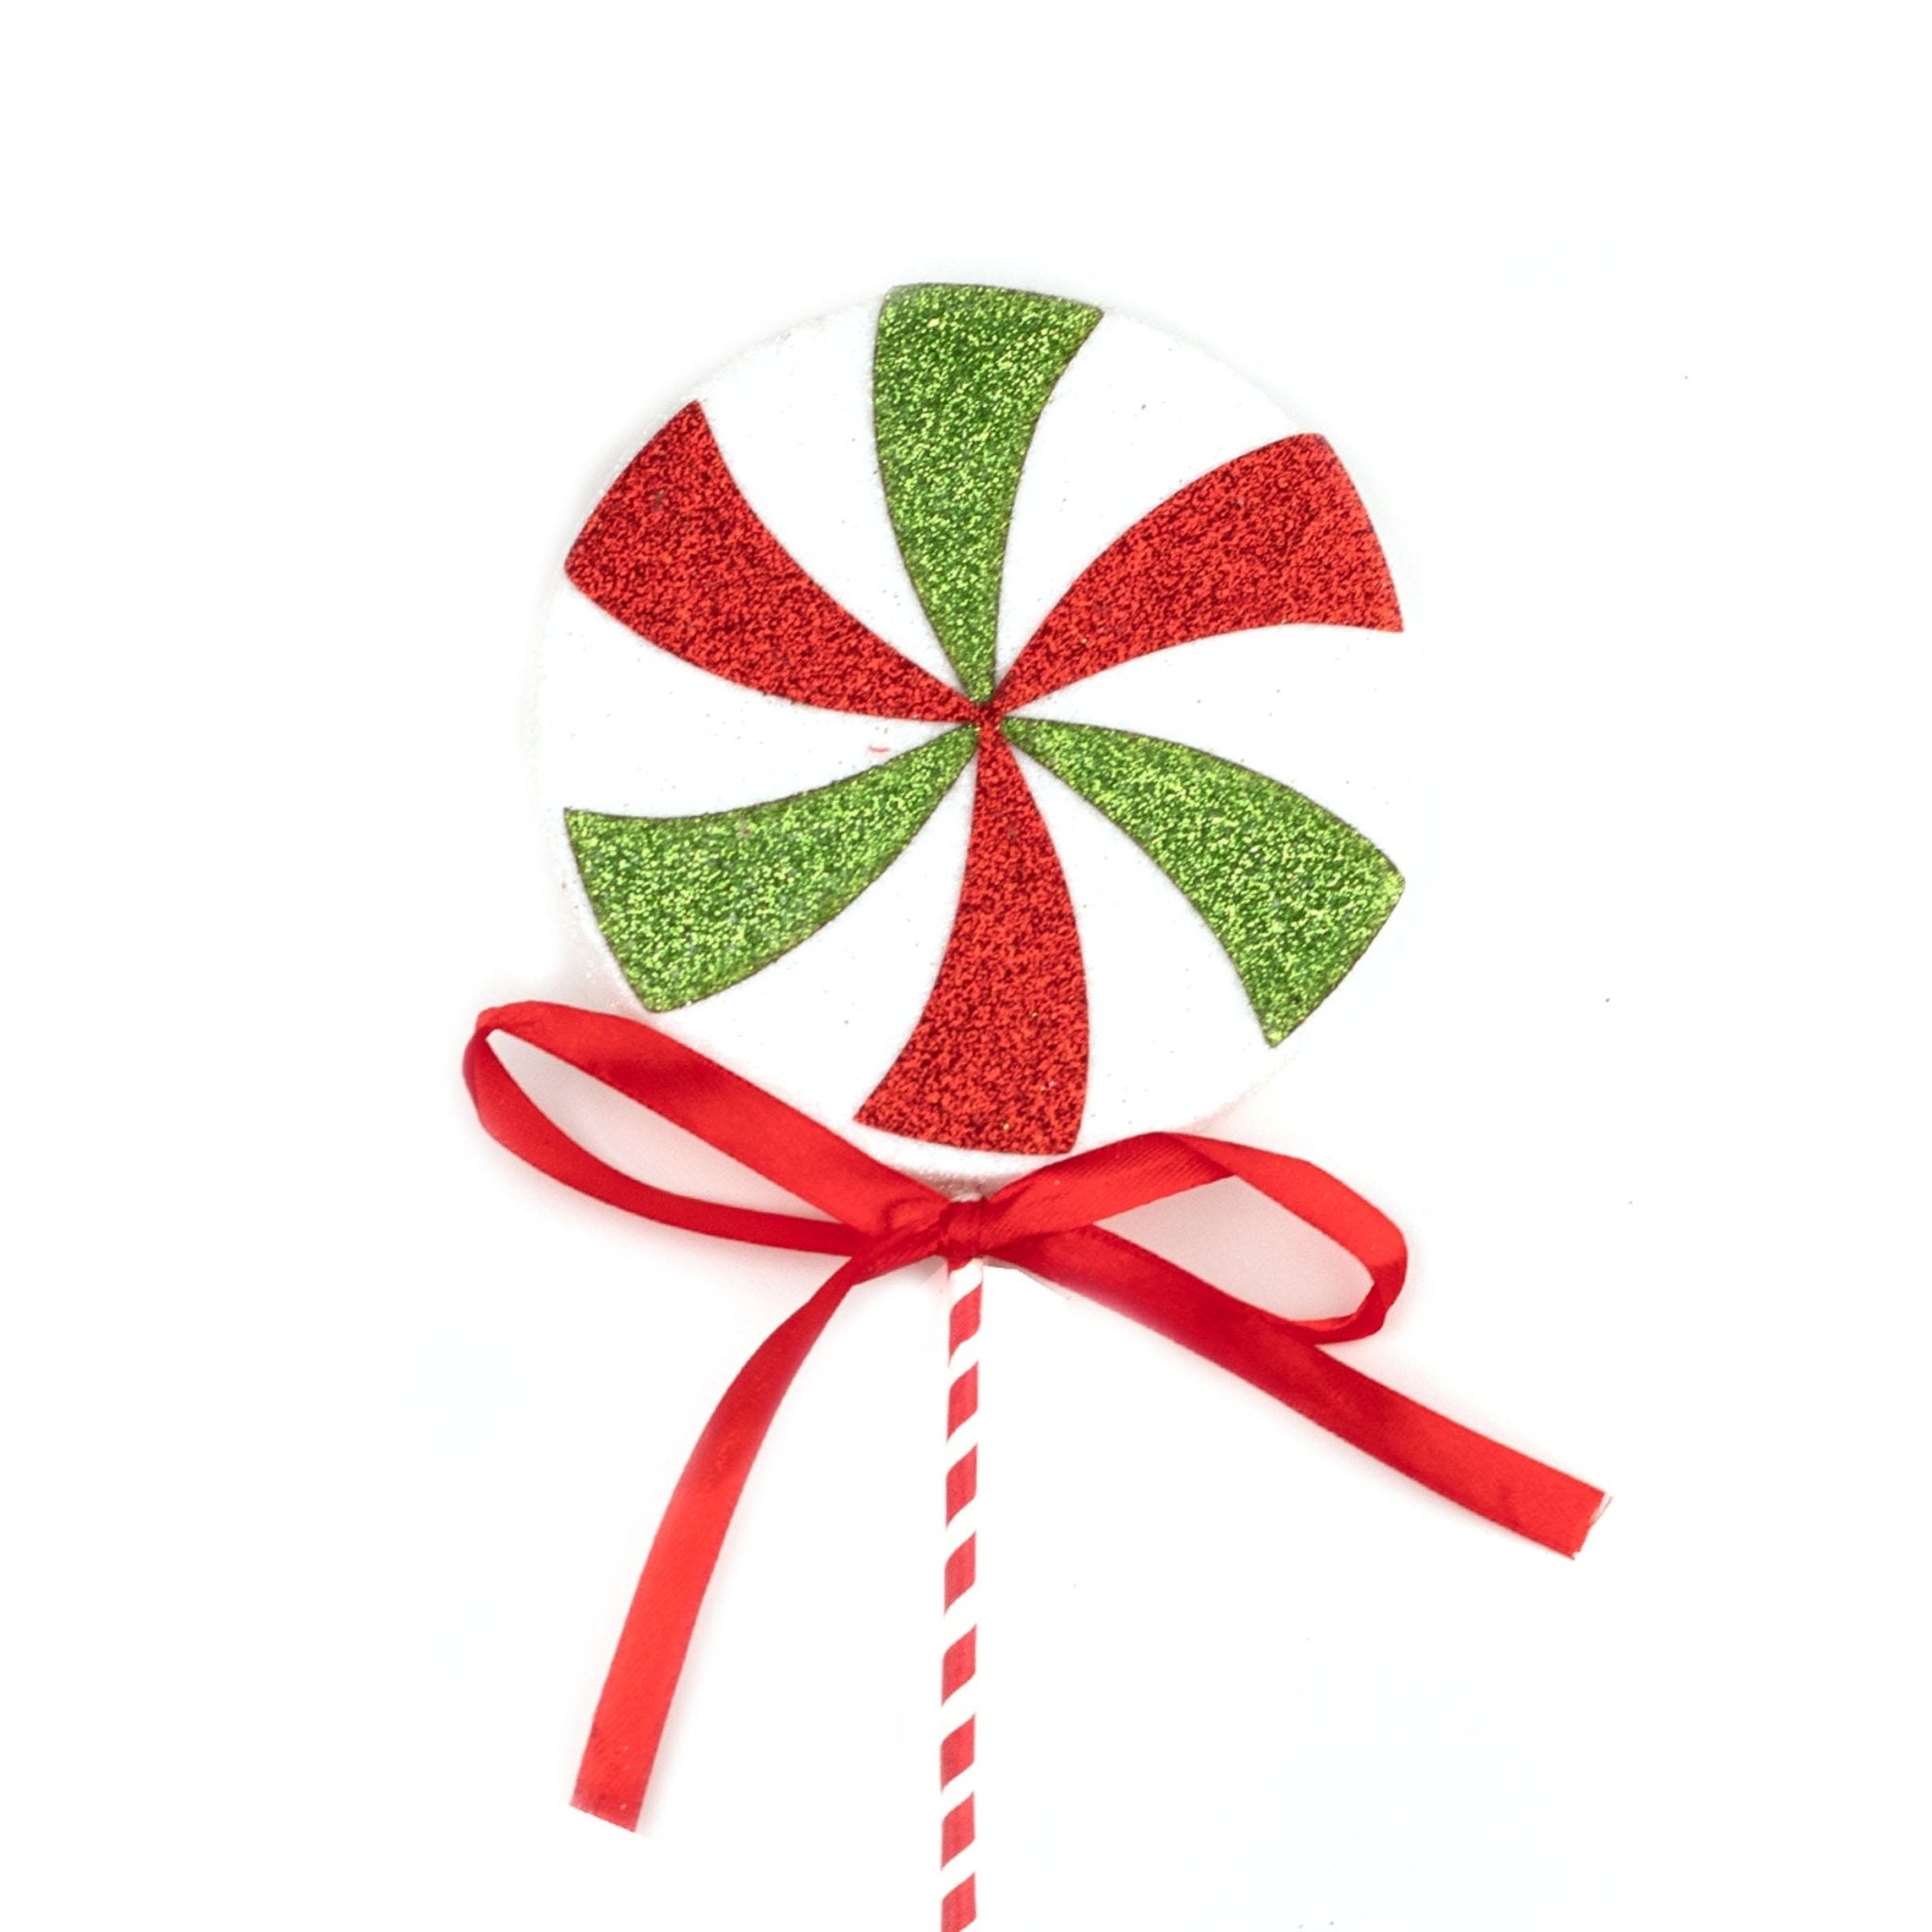 43cm Glittered Red Green White Candy Pick 01301 - MODA FLORA Santa's Workshop